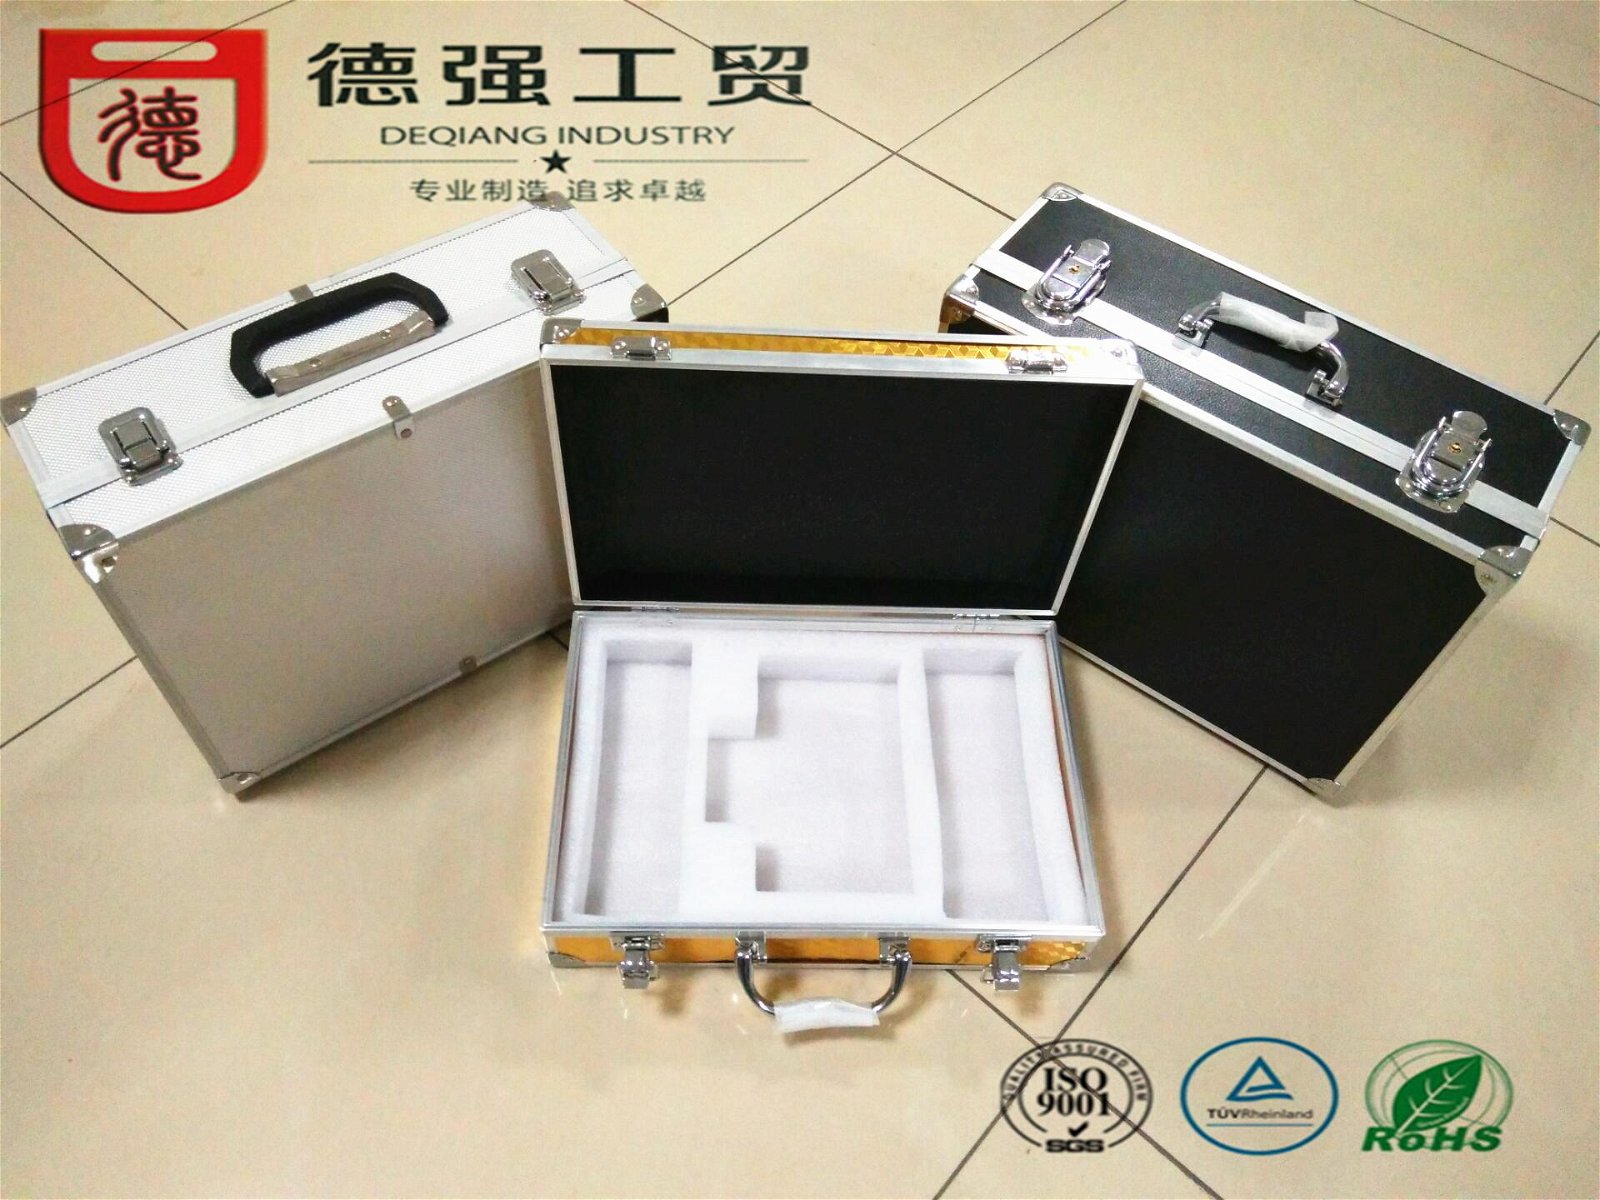 Aluminum box for Hardware and machine tools 2